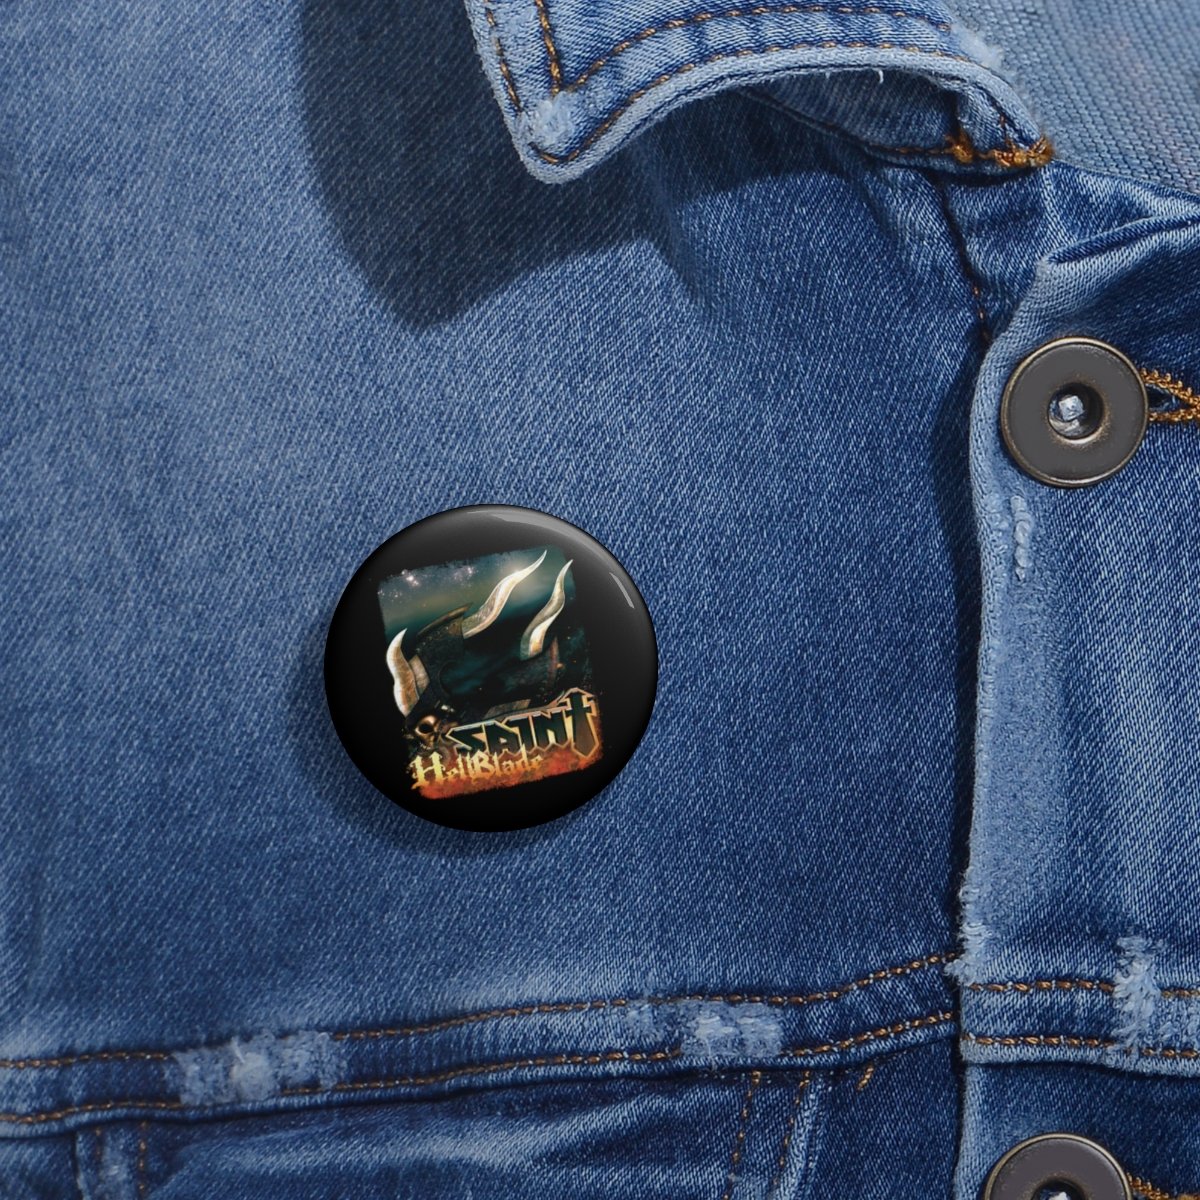 Saint – Hellblade Pin Buttons